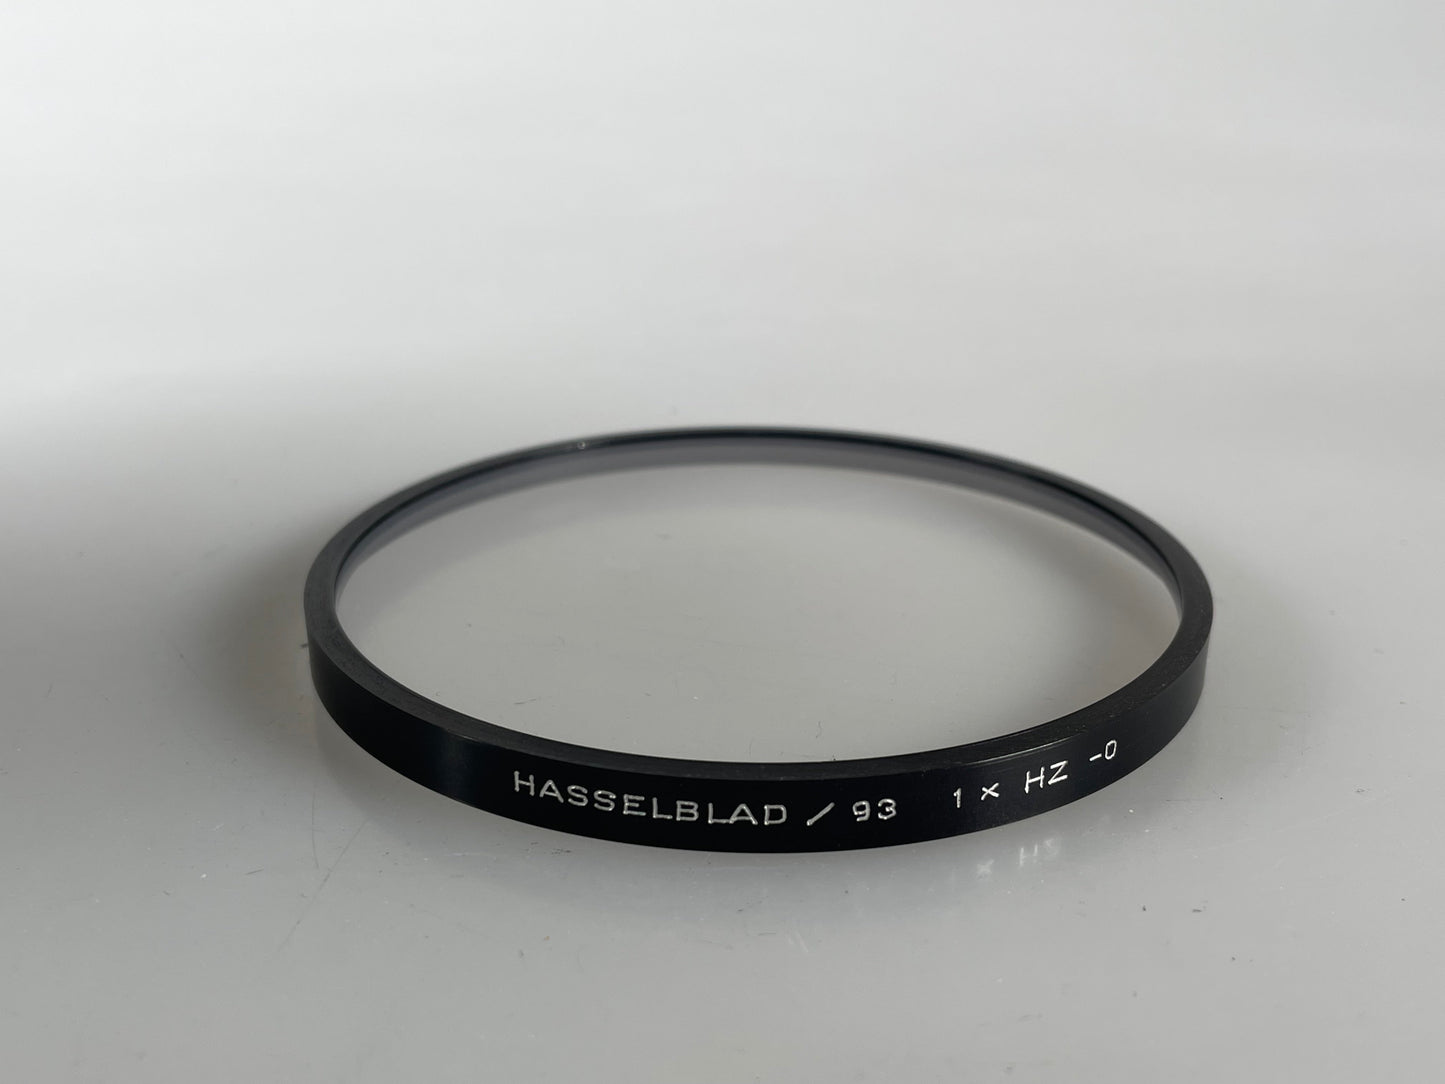 Hasselblad 93mm 1x HZ -0 UV FILTER